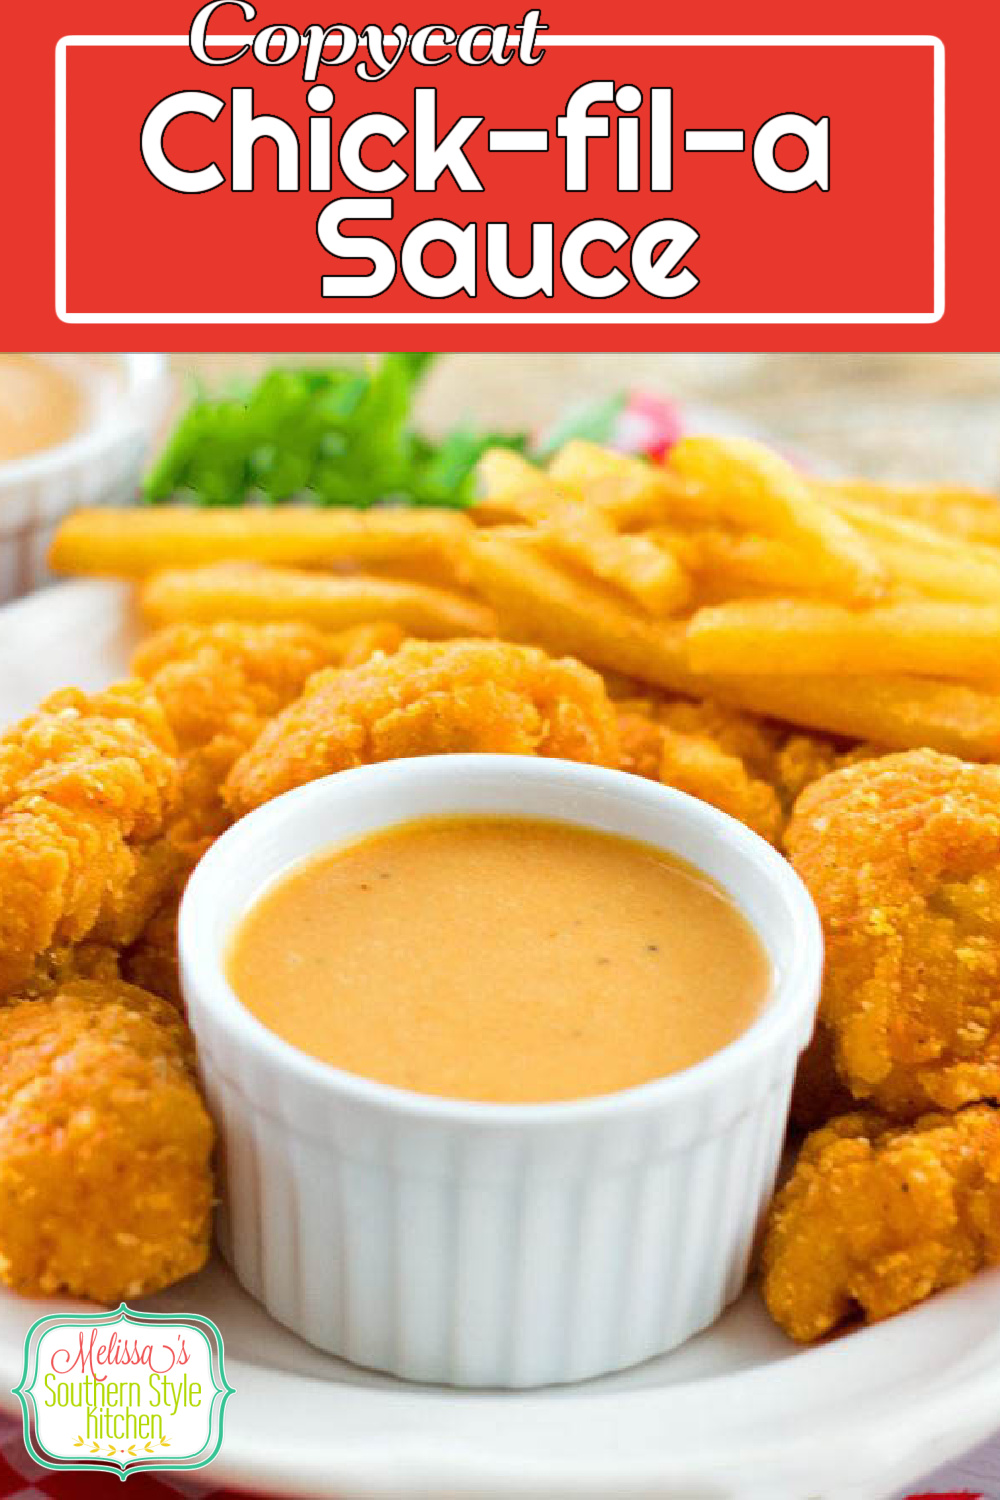 Copycat Chick-fil-A Sauce #copycat #chickfilasauce #sauce #appetizer #dip #food #recipes #southernrecipes #southernfood #copycatrecipes #melissassouthernstylekitchen